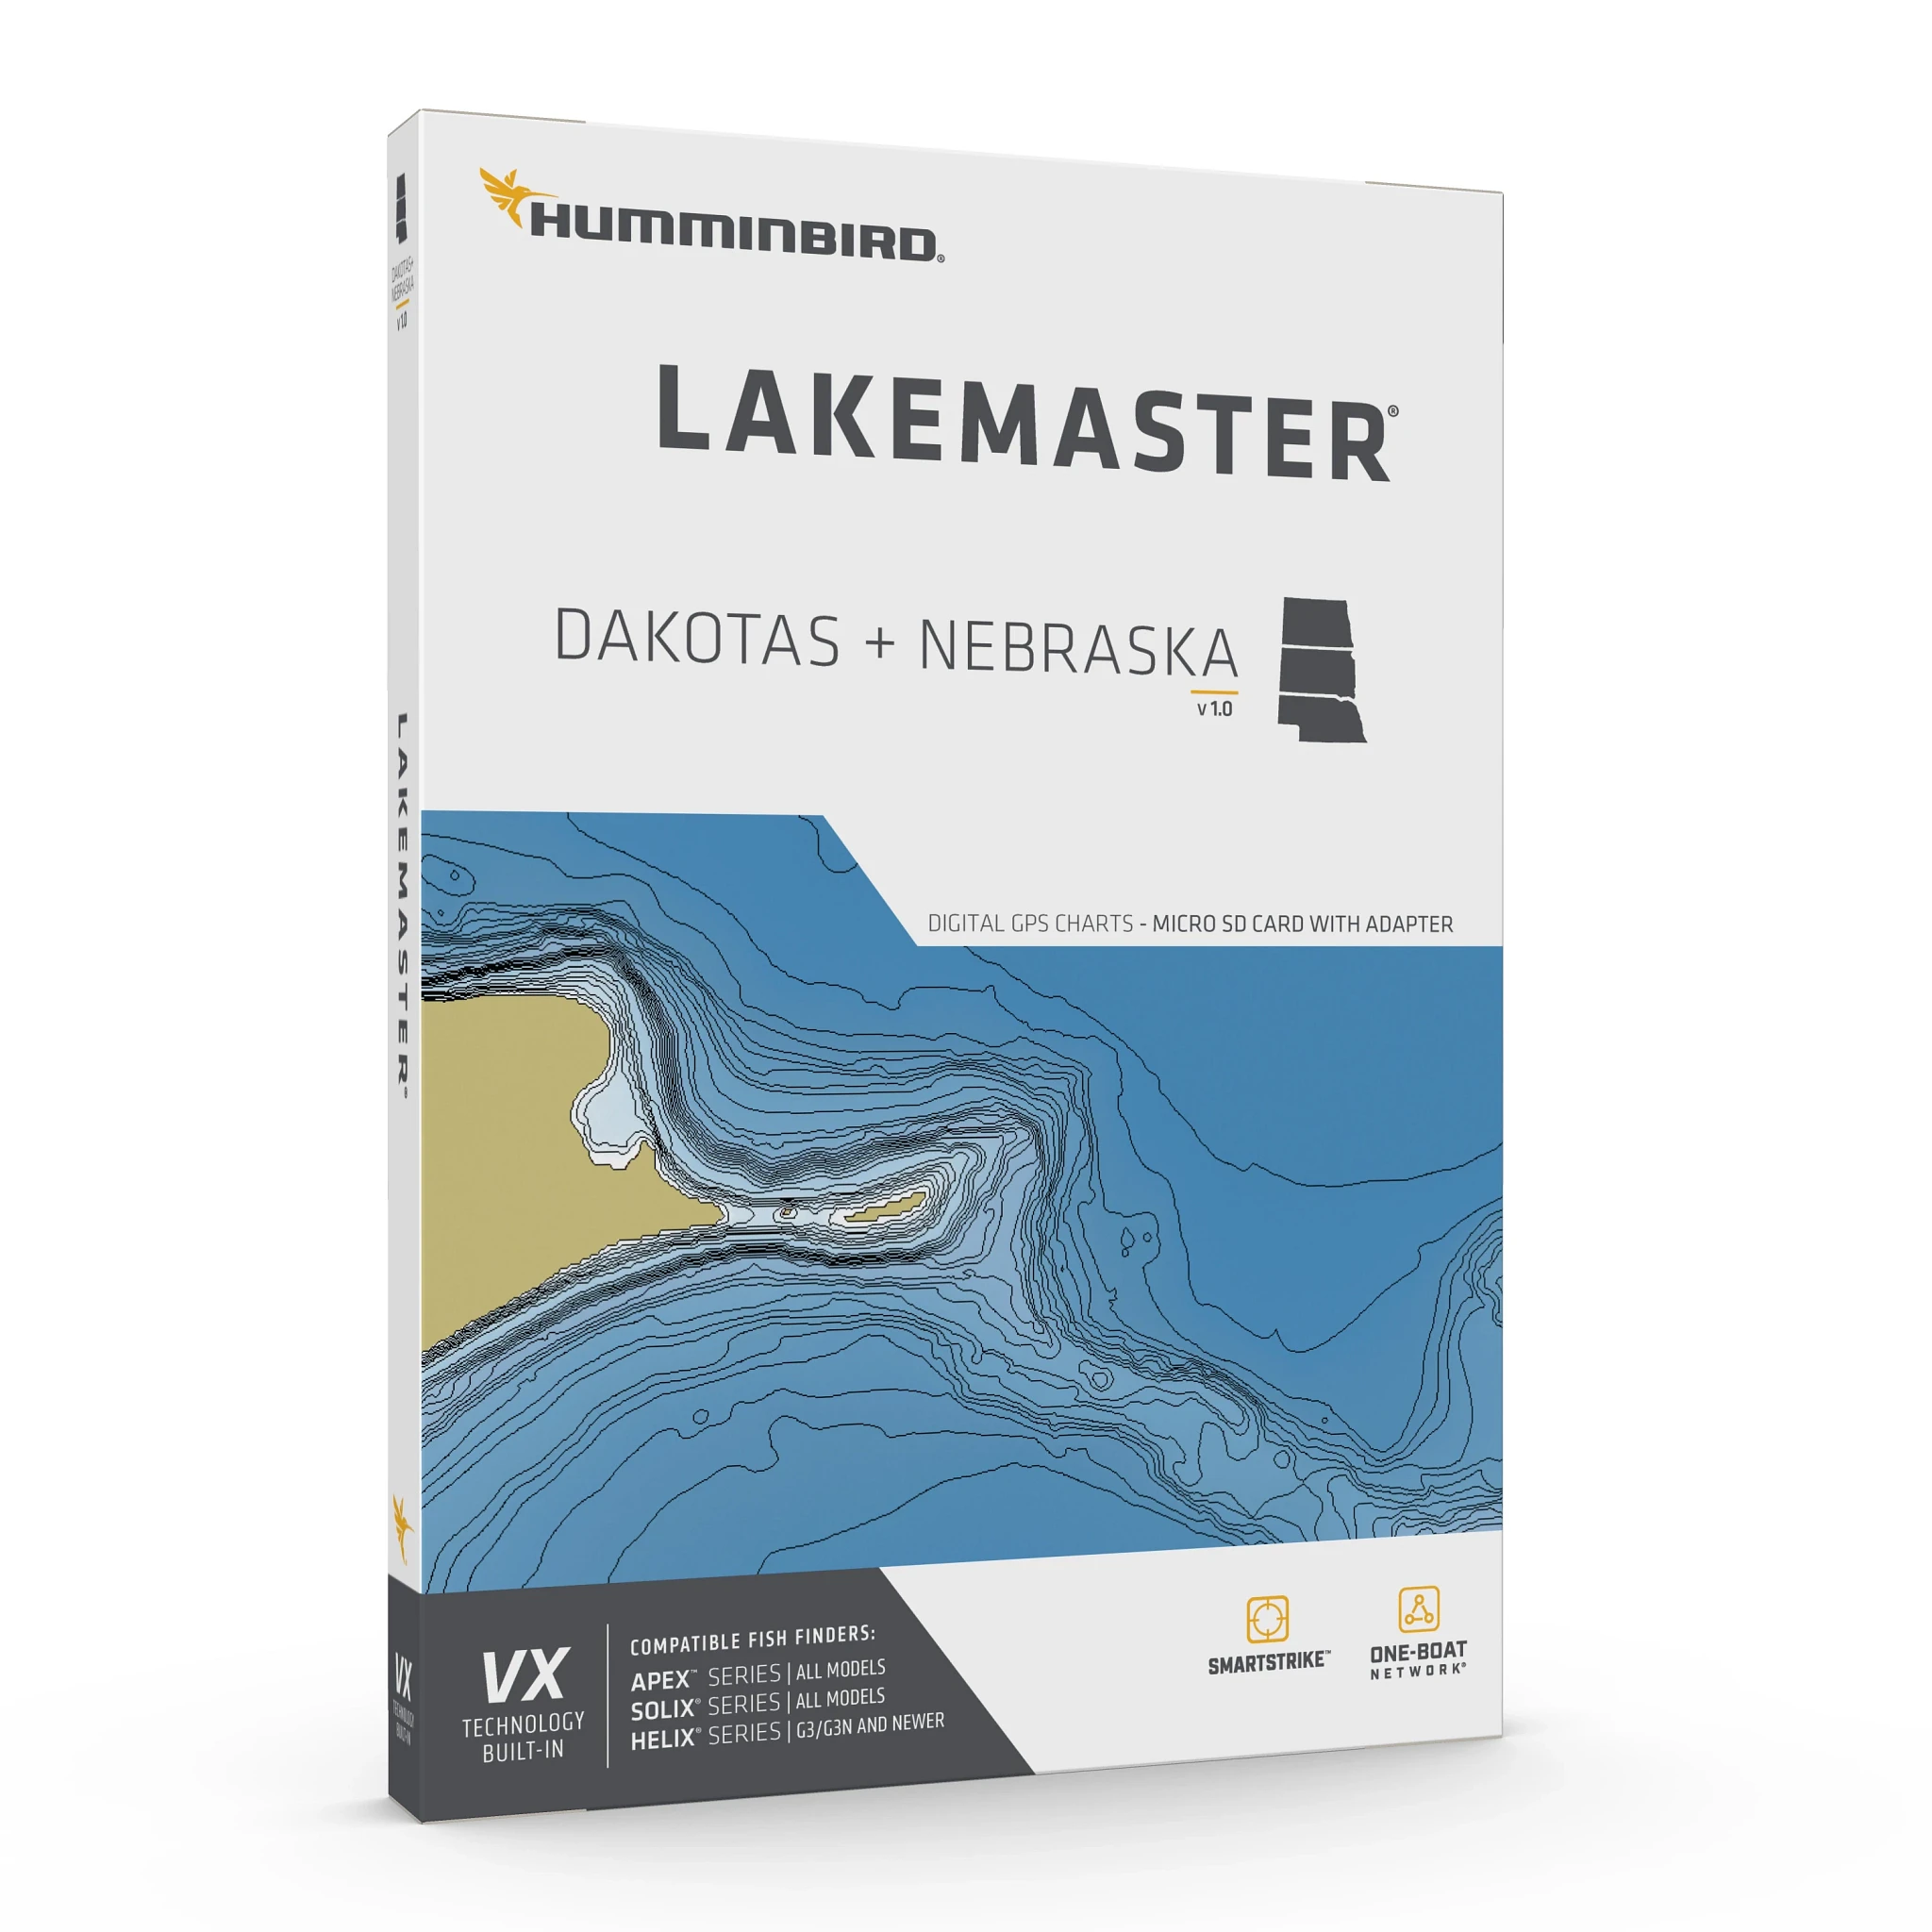 LakeMaster - Dakotas + Nebraska Packaging